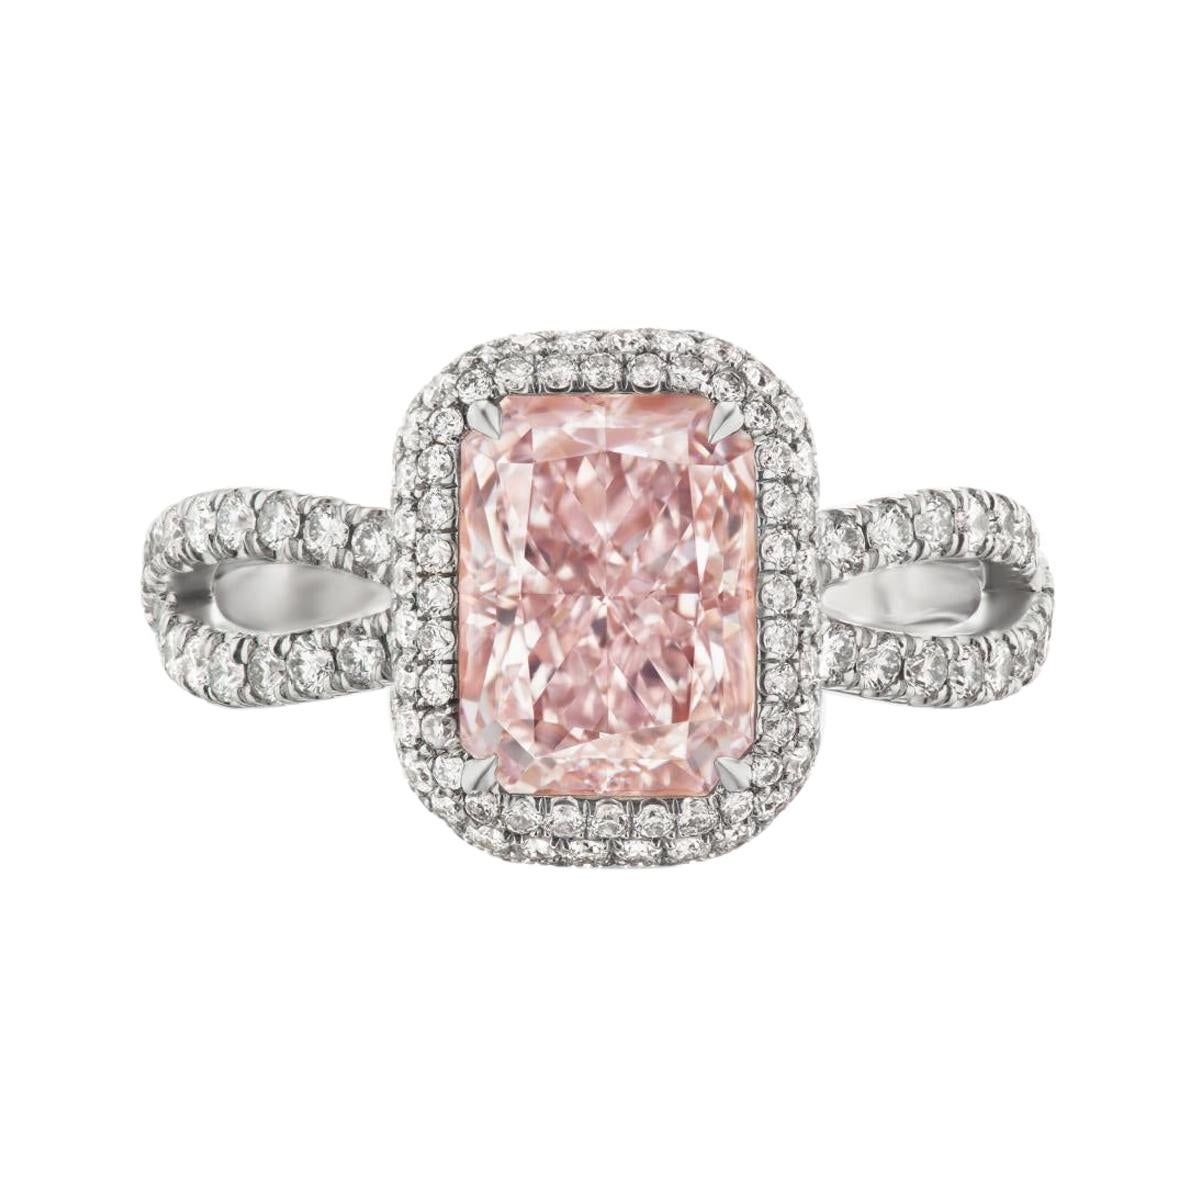 2.34 Carat Very Light Pink Radiant Diamond Internally Flawless in Platinum, GIA